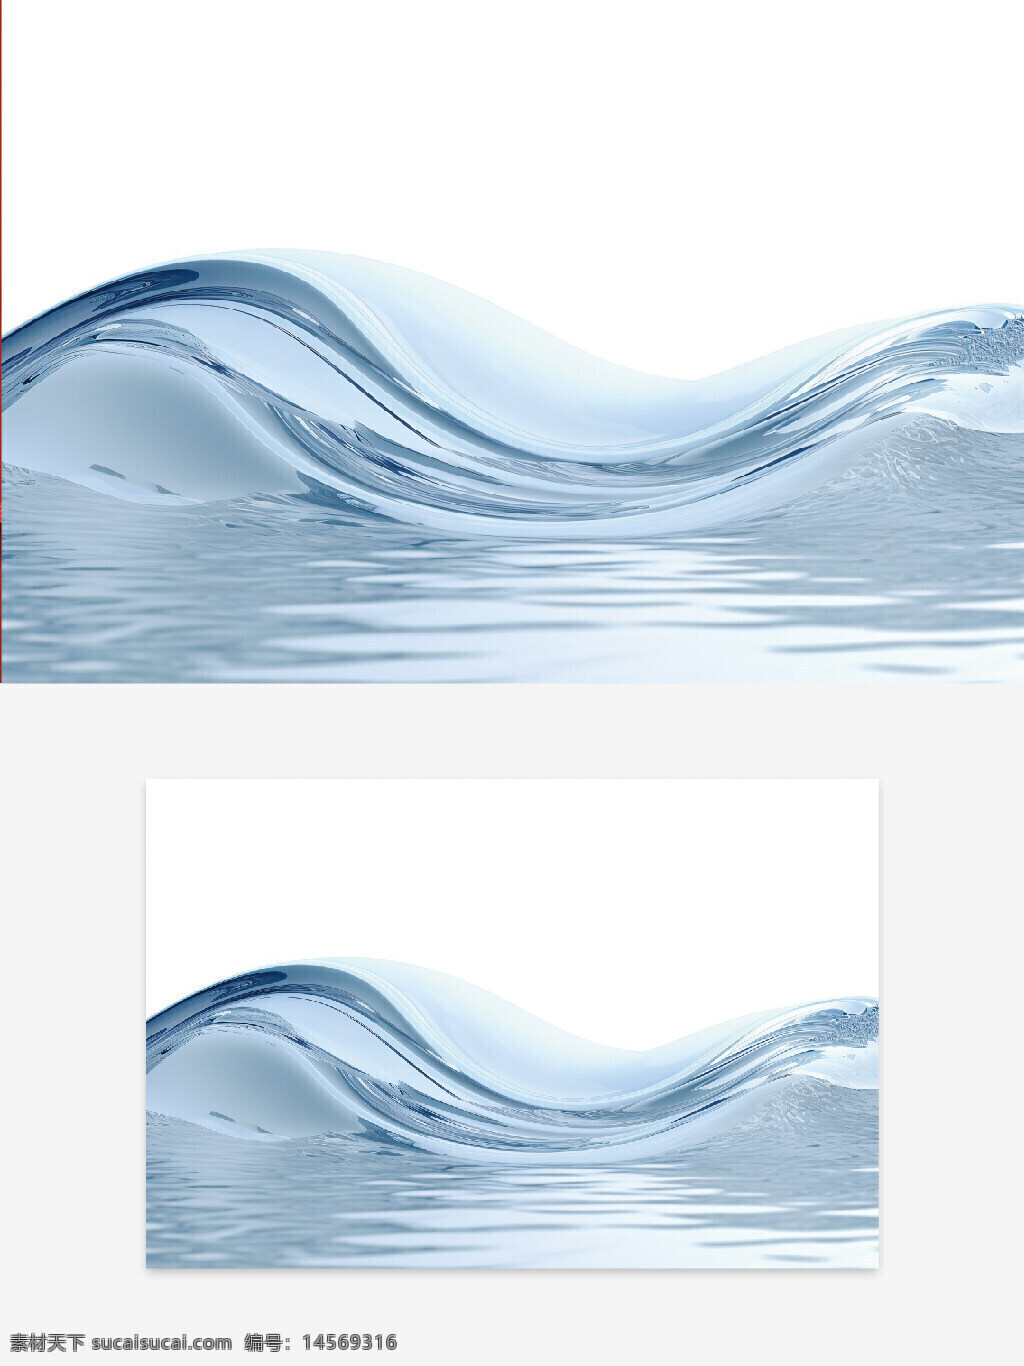 ppt背景。广告背景 背景设计。 夏日背景 波浪背景 抽象背景 抽象设计。大气背景